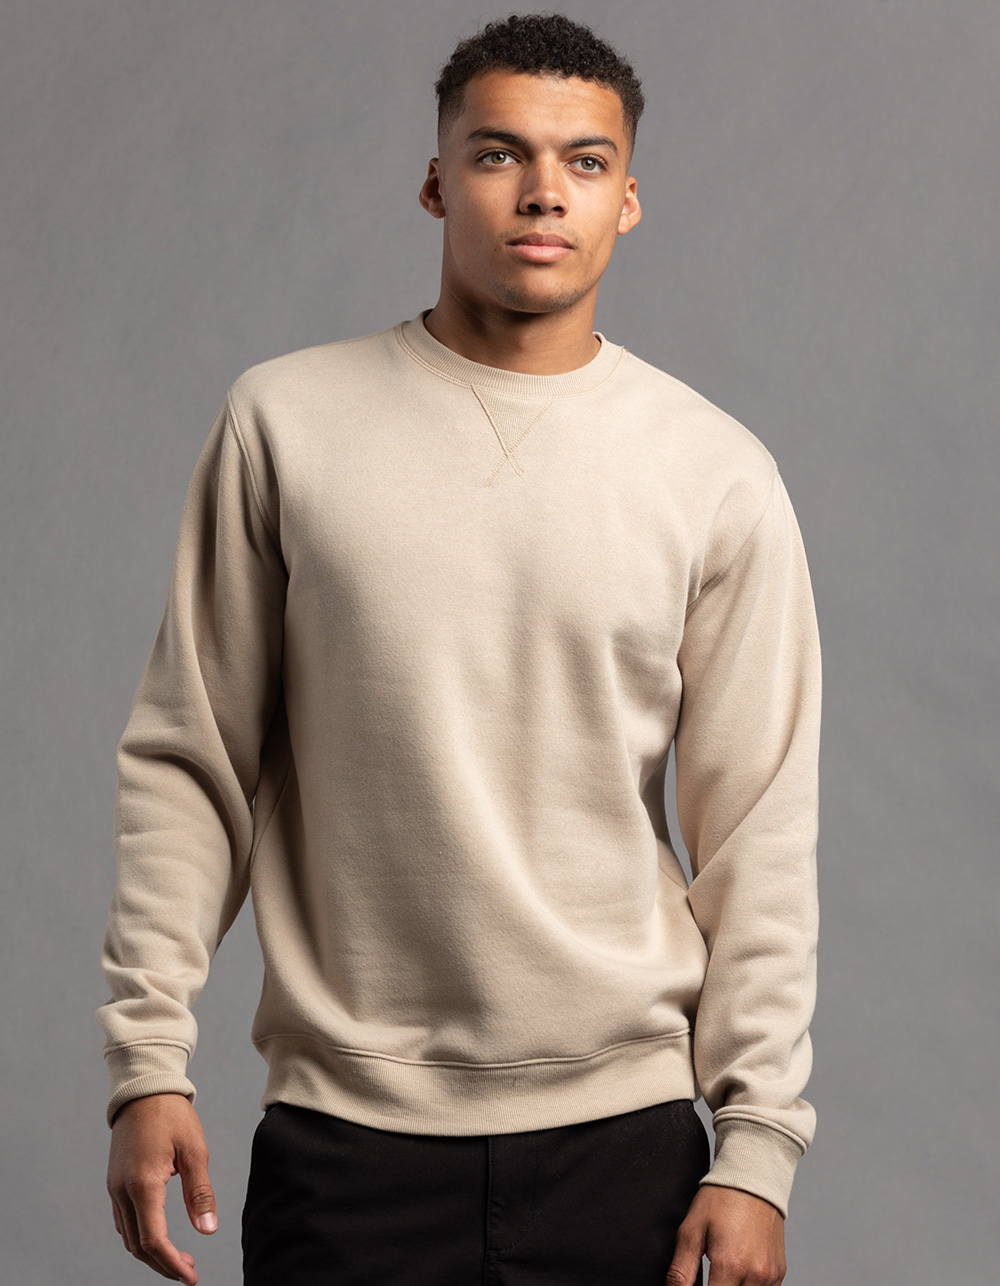 Men's Sweatshirts, Plain & Printed Sweatshirts for Men